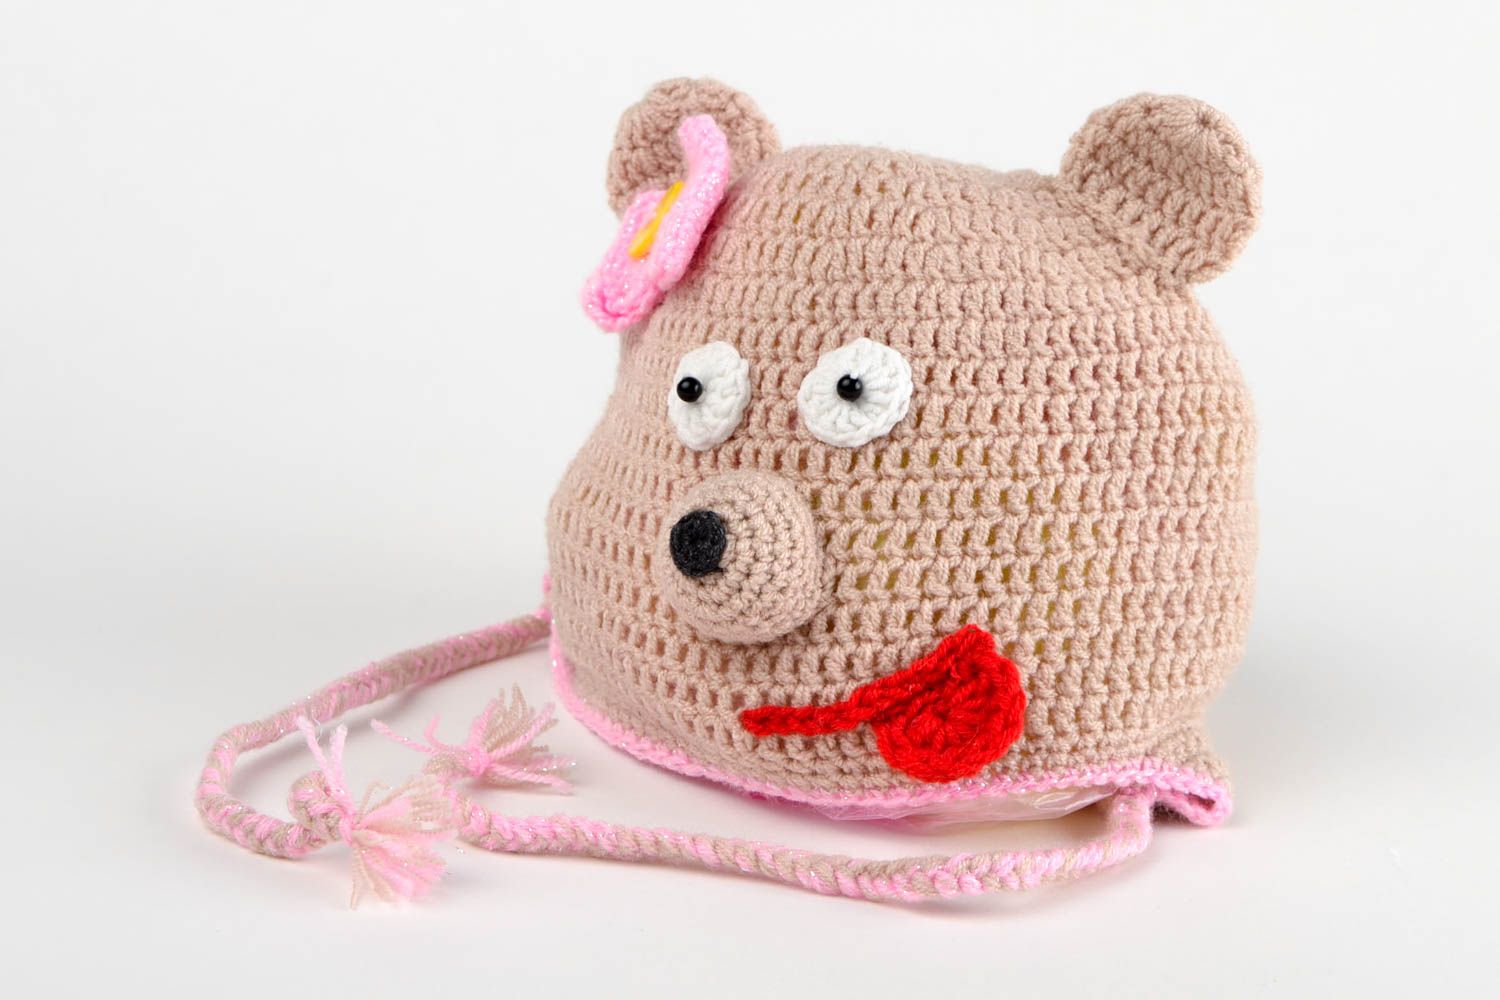 Handmade crocheted cap warm accessory for kids unusual warm winter hat photo 1